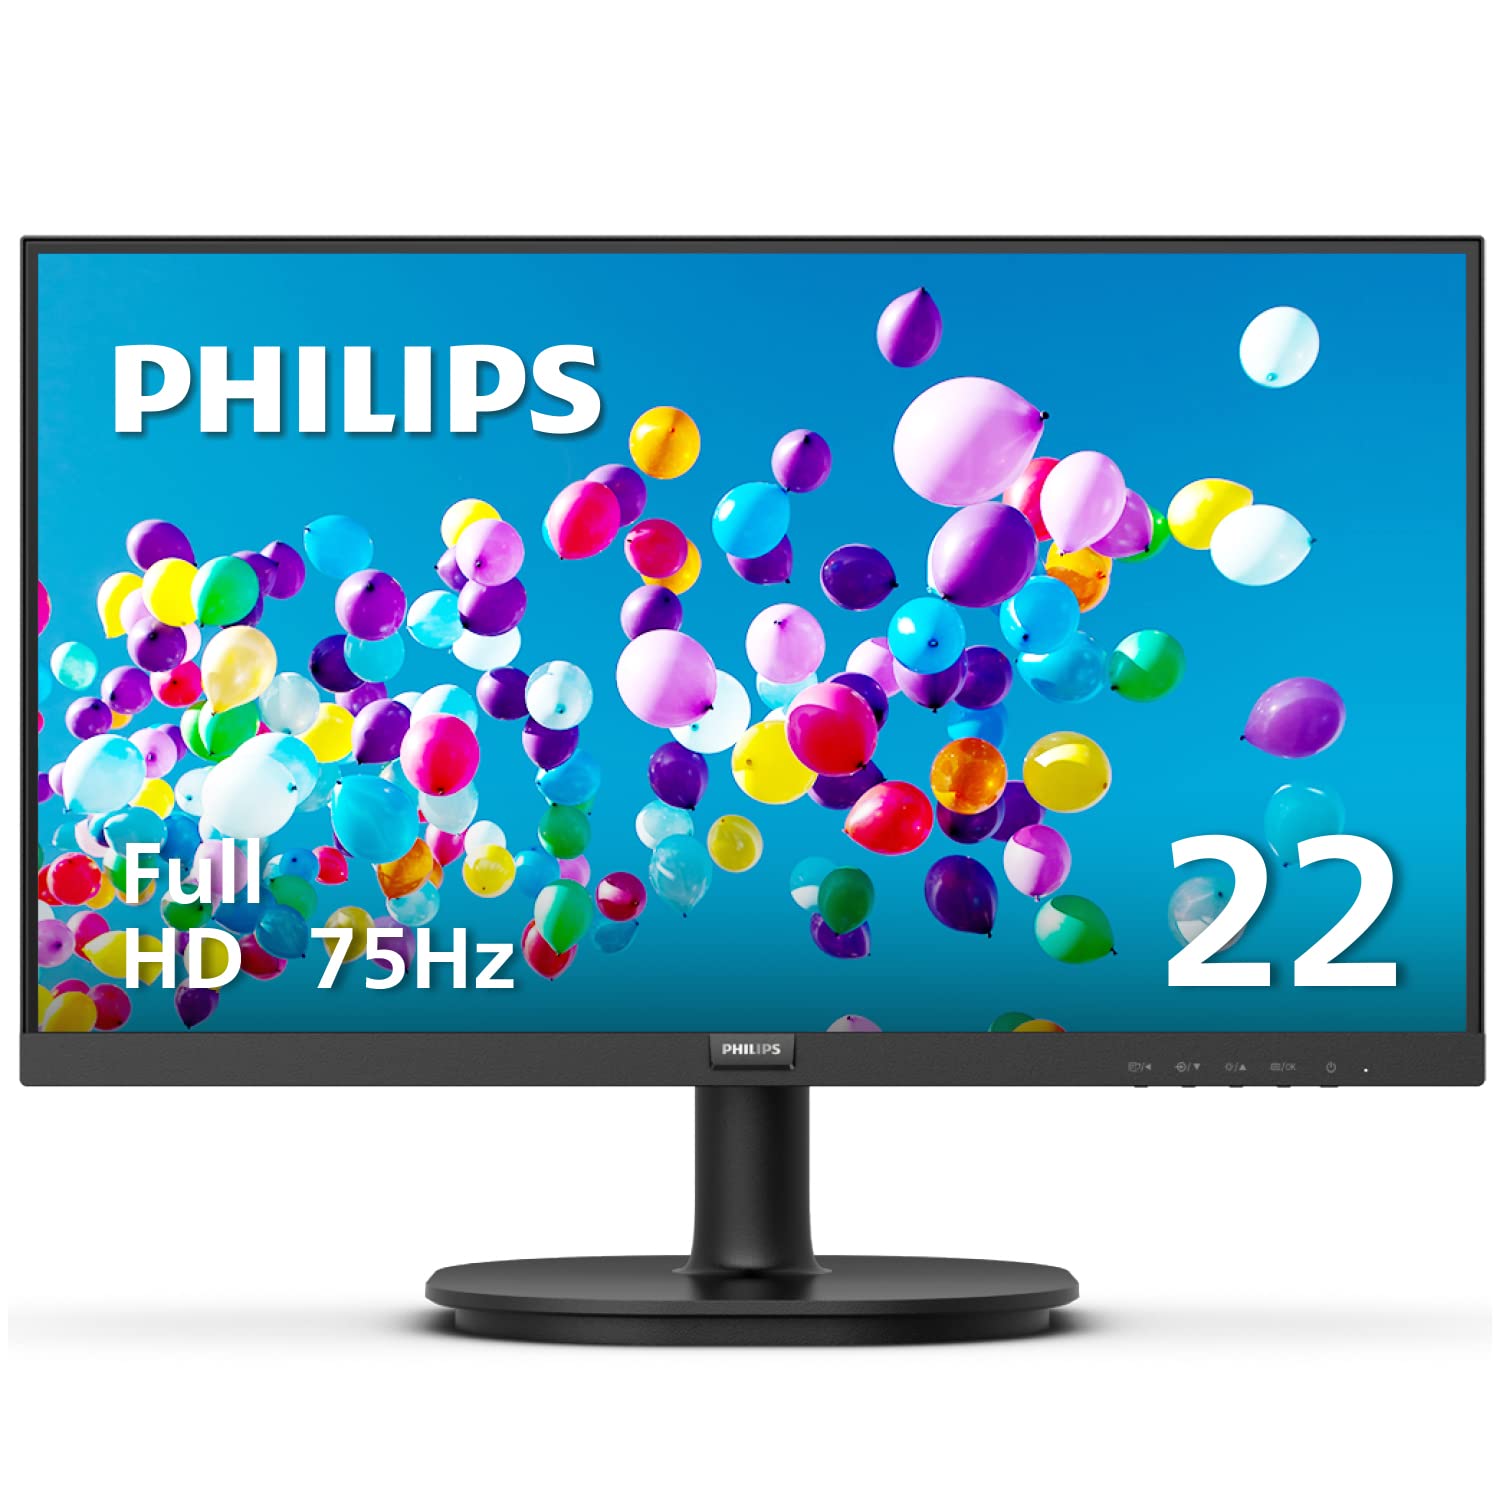 Philips Computer Monitors 飞利浦 Pure 2